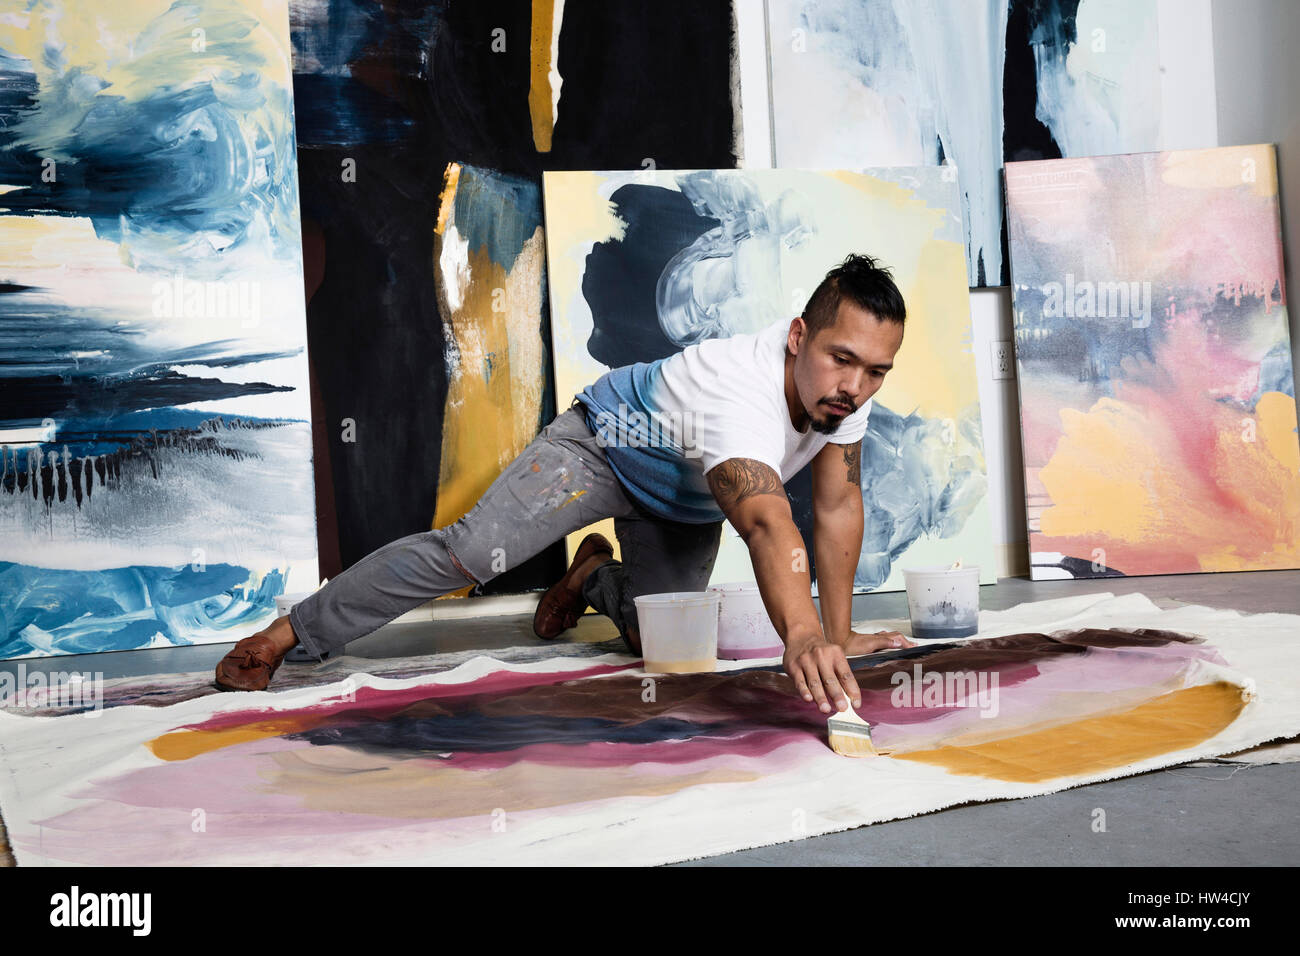 Pacific Islander artist kneeling on floor painting on canvas Stock Photo